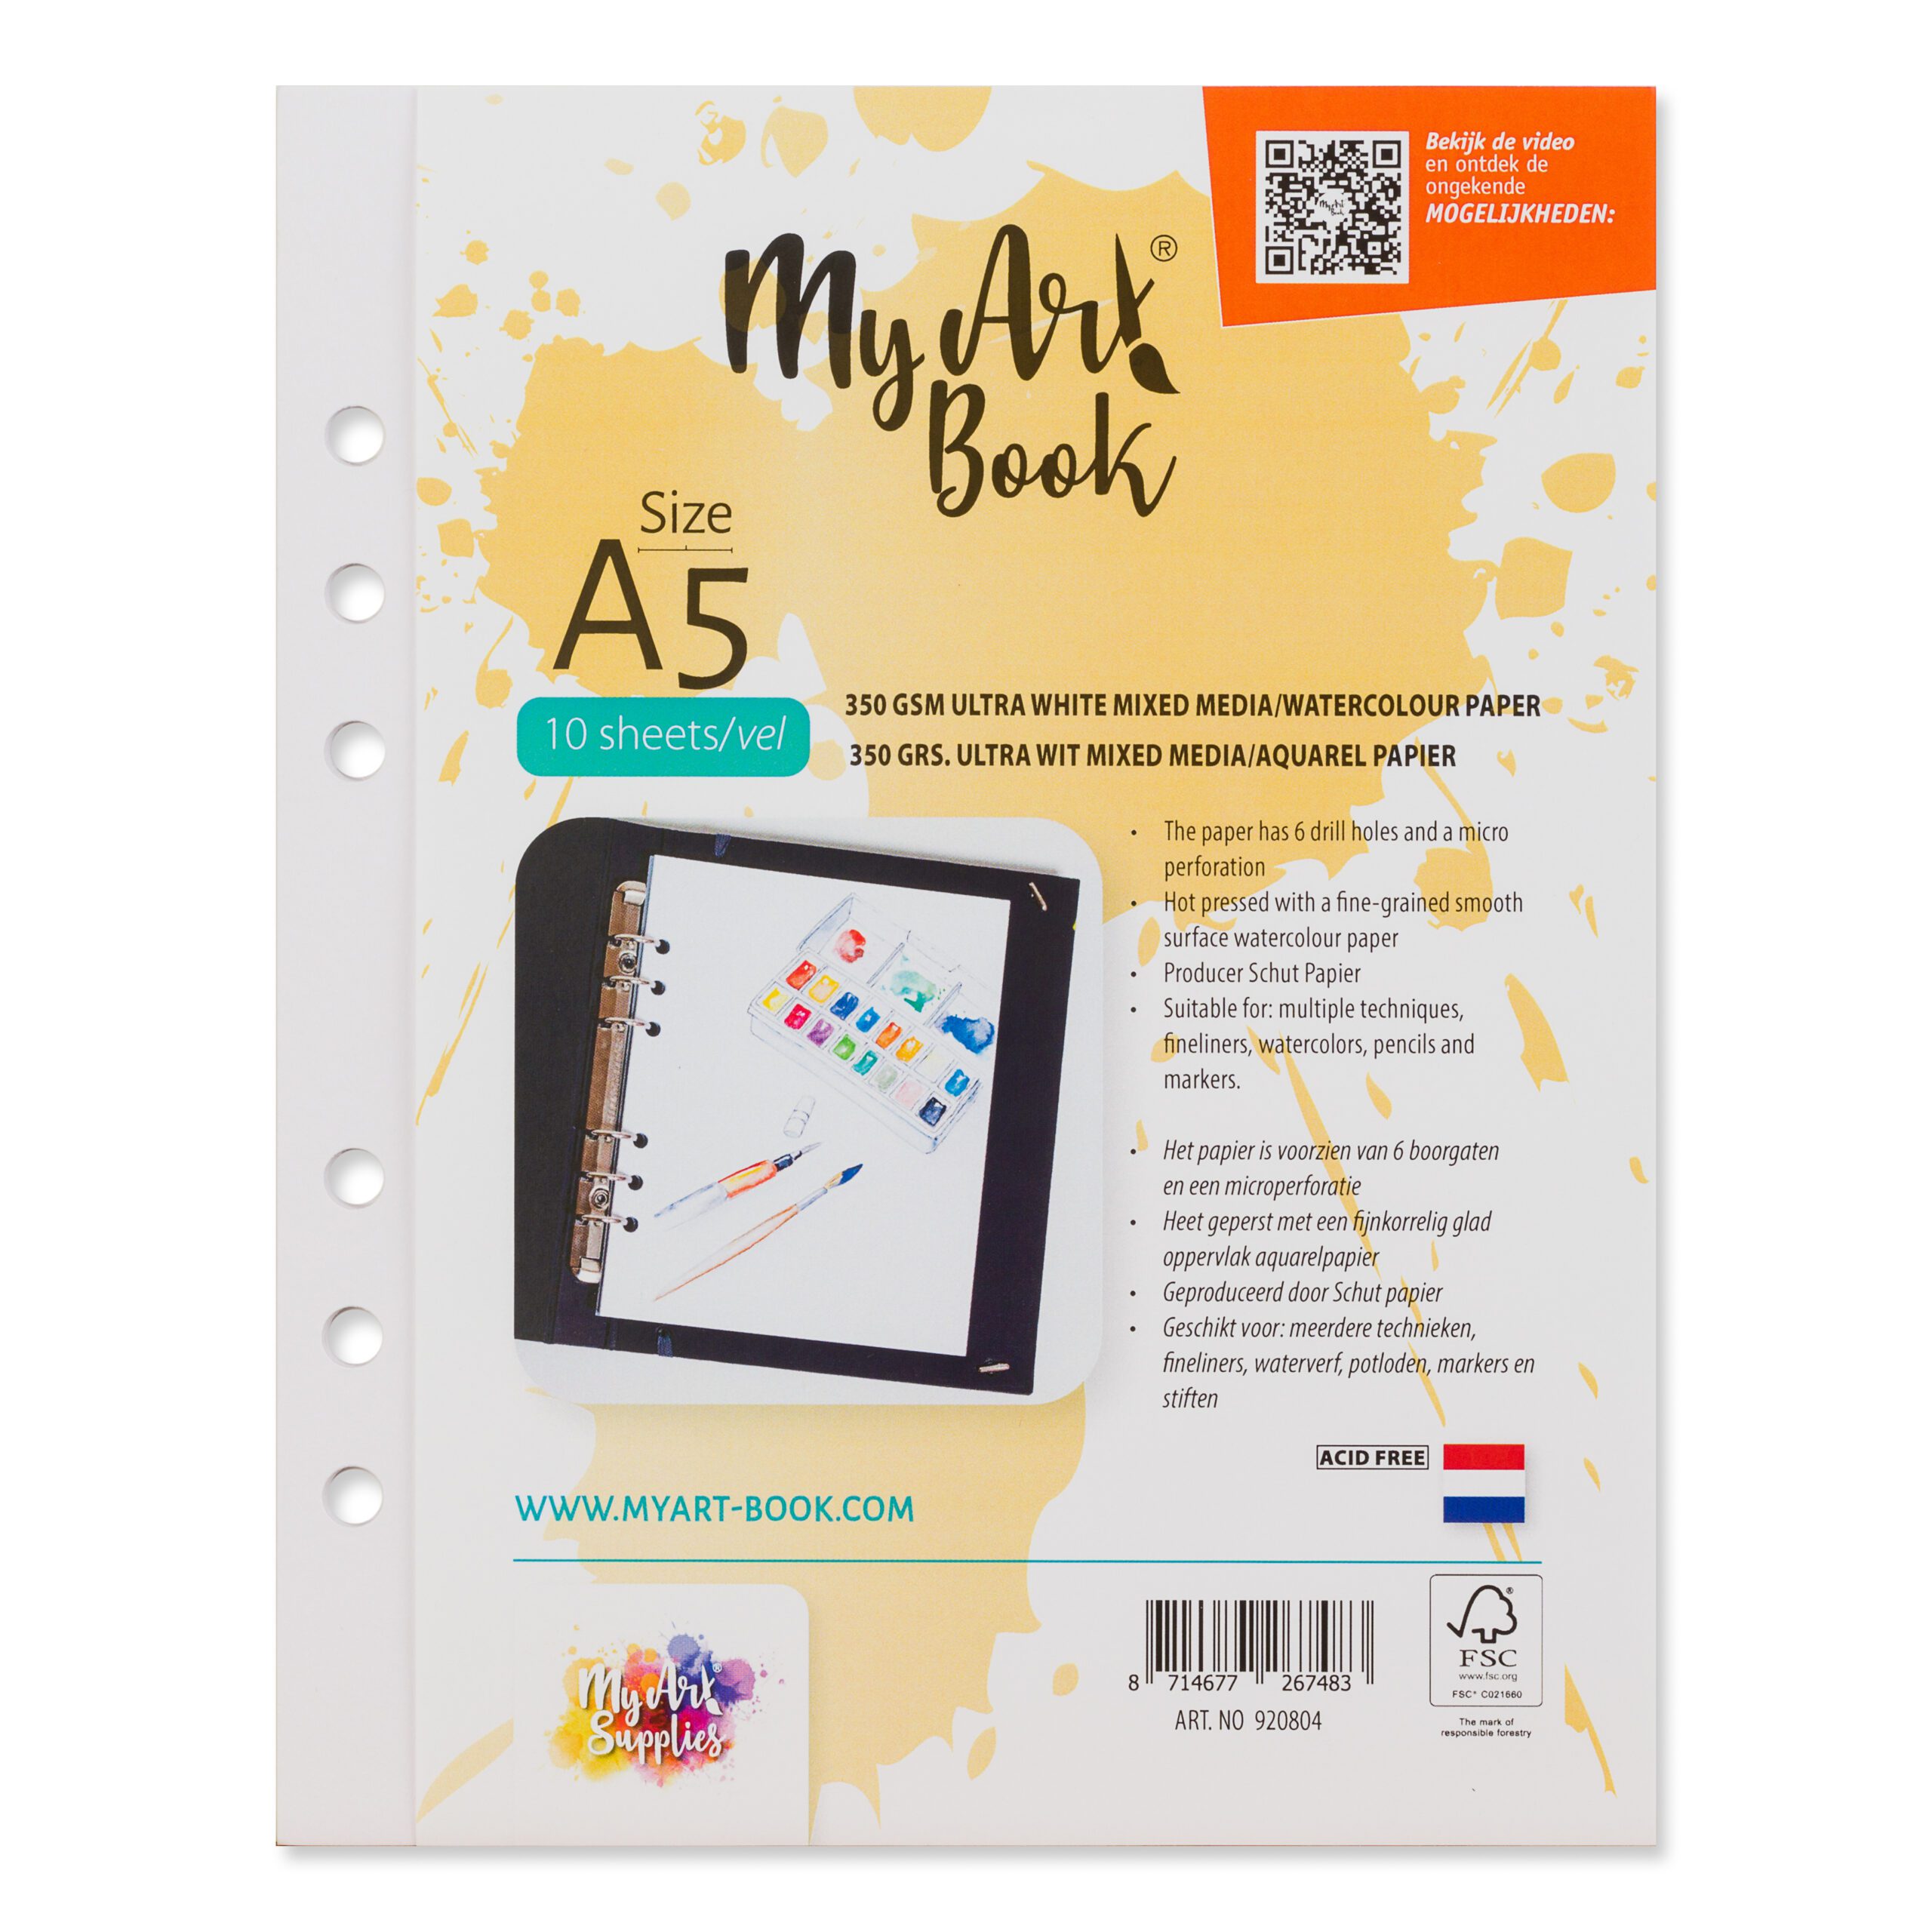 Antecedent staal zomer MyArt®Book 350 g/m2 ultra wit mixed media / aquarel papier – formaat A5 -  MyArt Book